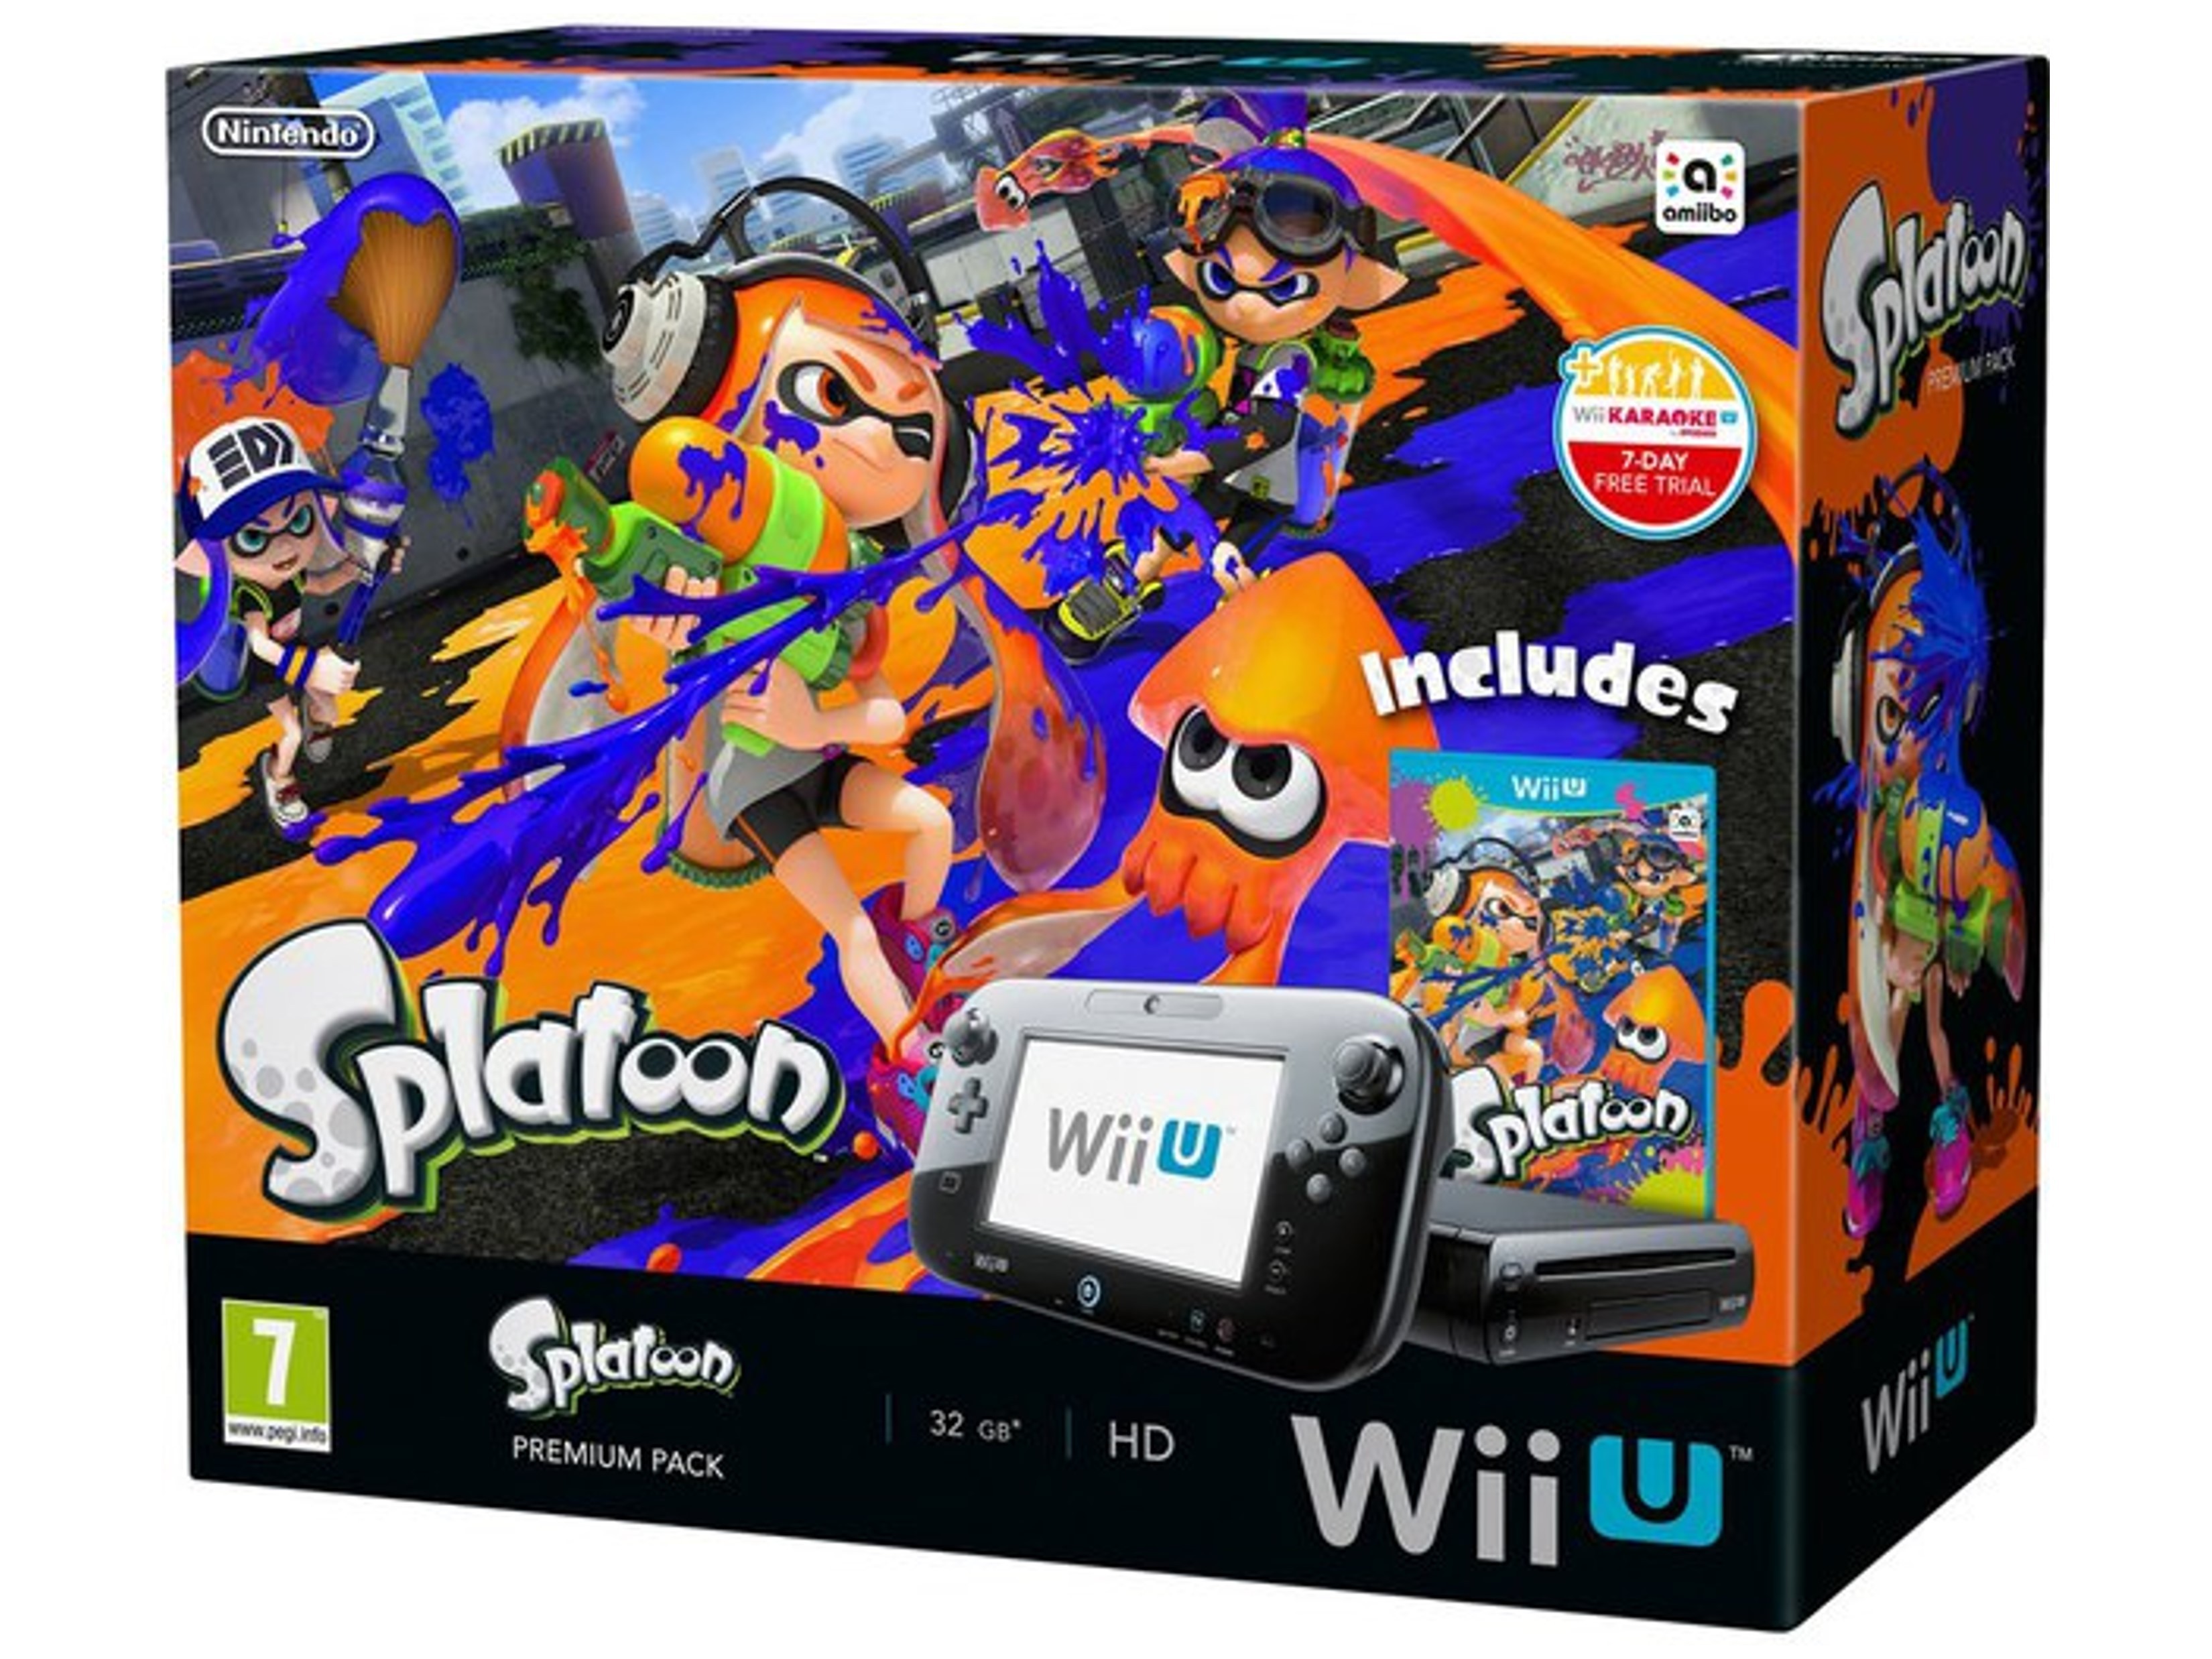 Nintendo Wii U Starter Pack - Splatoon Edition [Complete] - Wii U Hardware